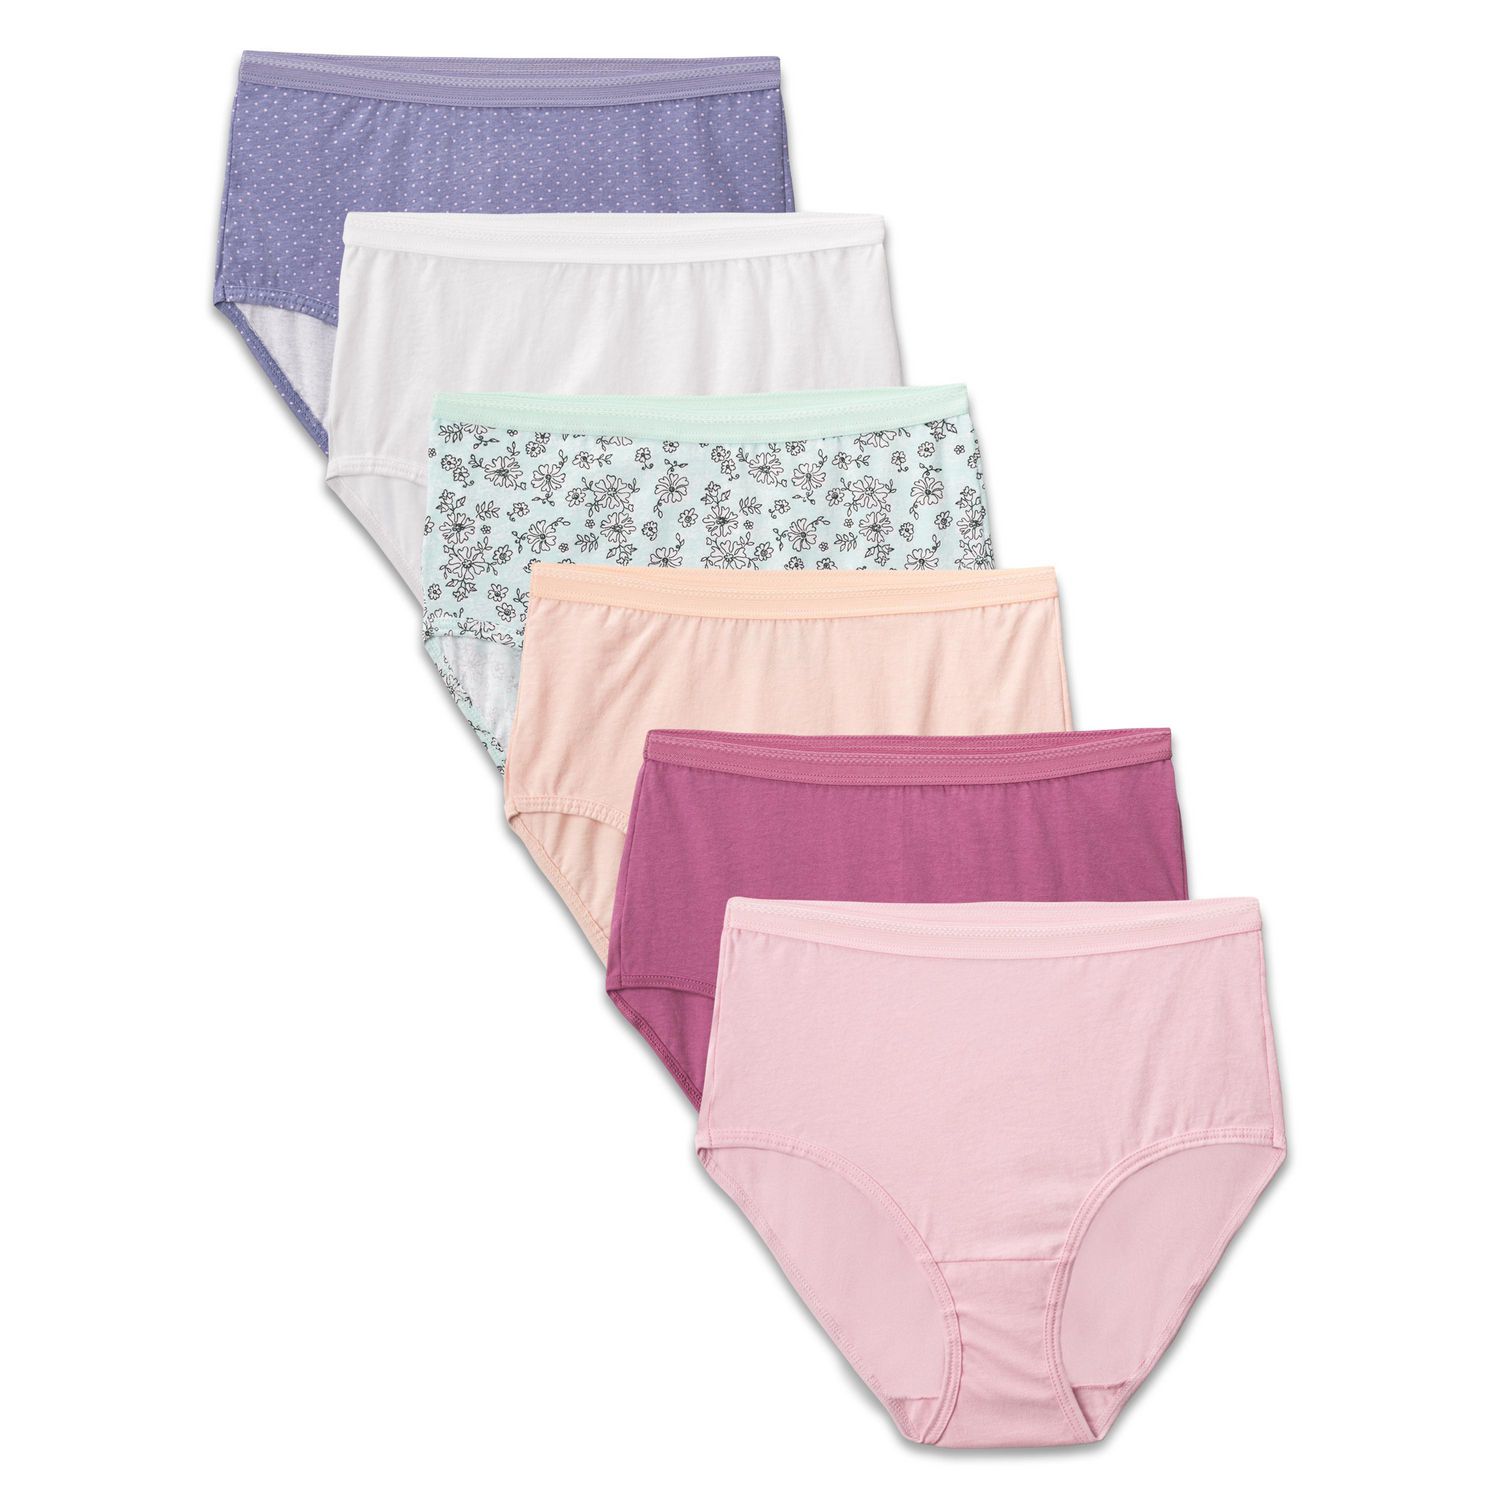 Candy Panties, Candy Underwear, Briefs, Cotton Briefs, Funny Underwear,  Panties for Women -  Sweden